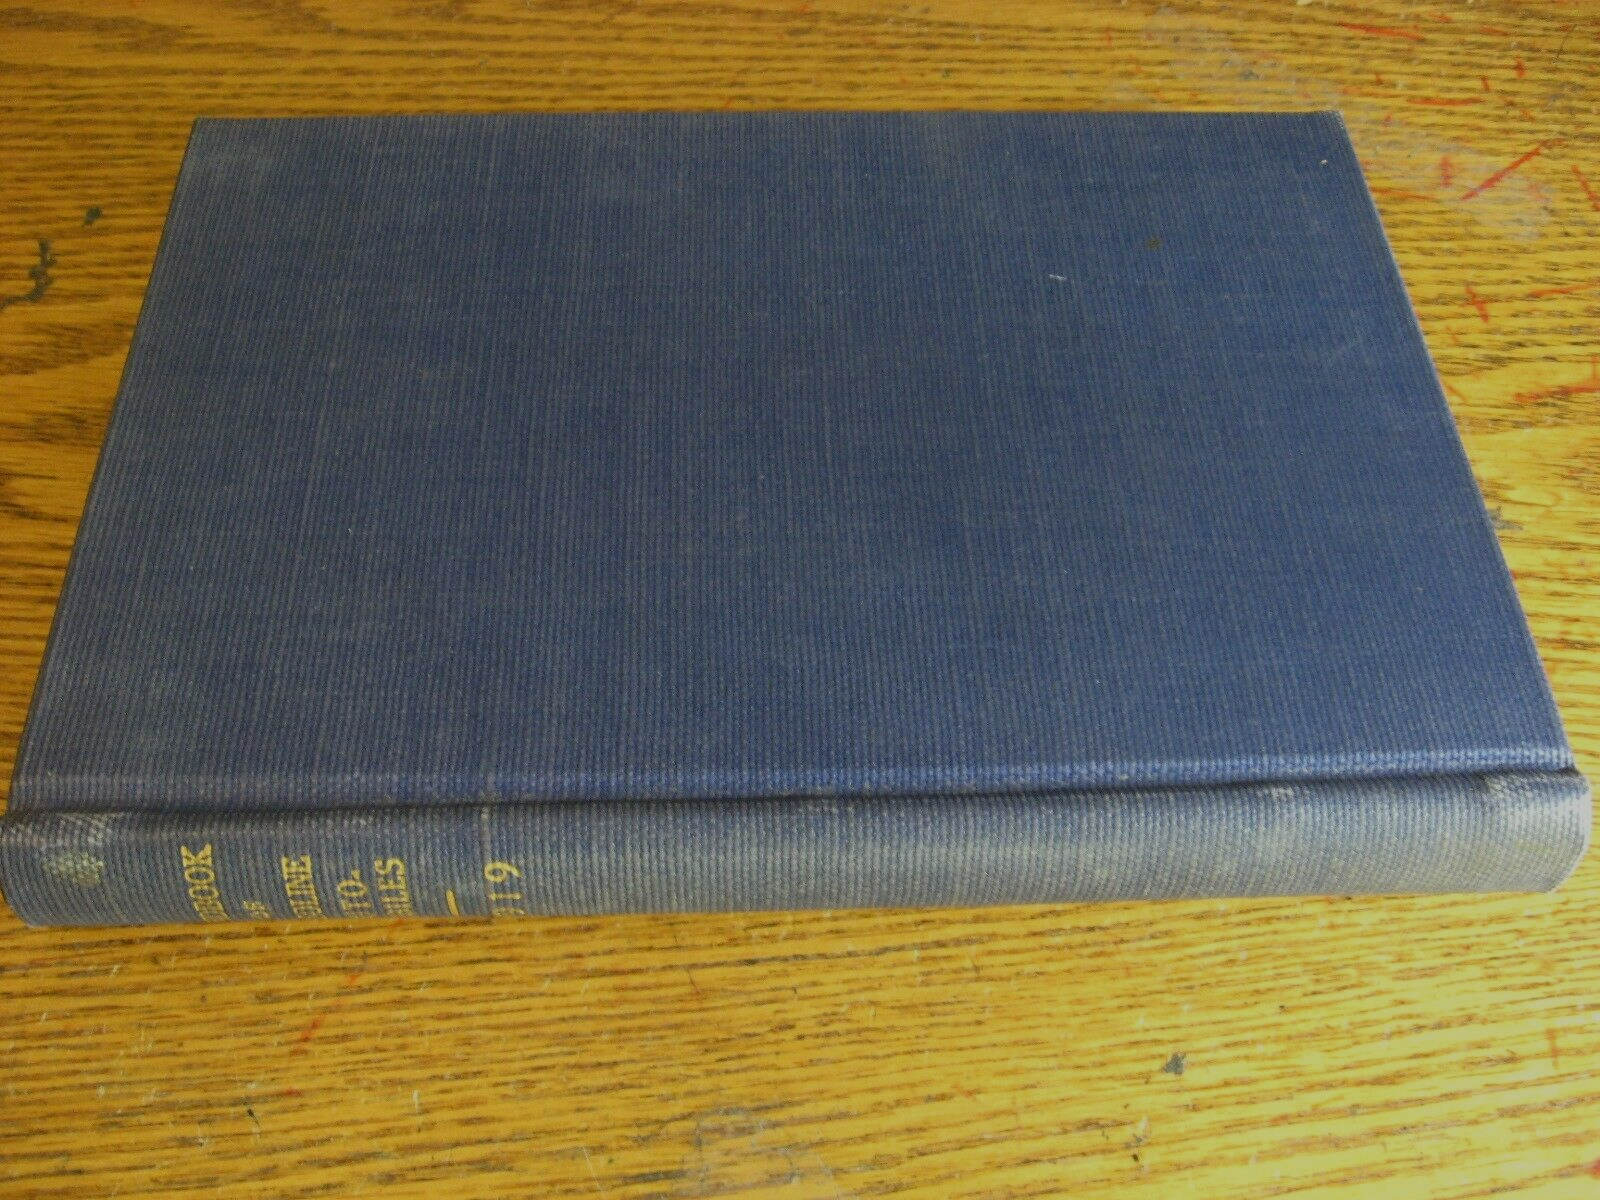 1919 Handbook of Automobiles Hand Book, McFarlan Buick Packard Cadillac - $108.90